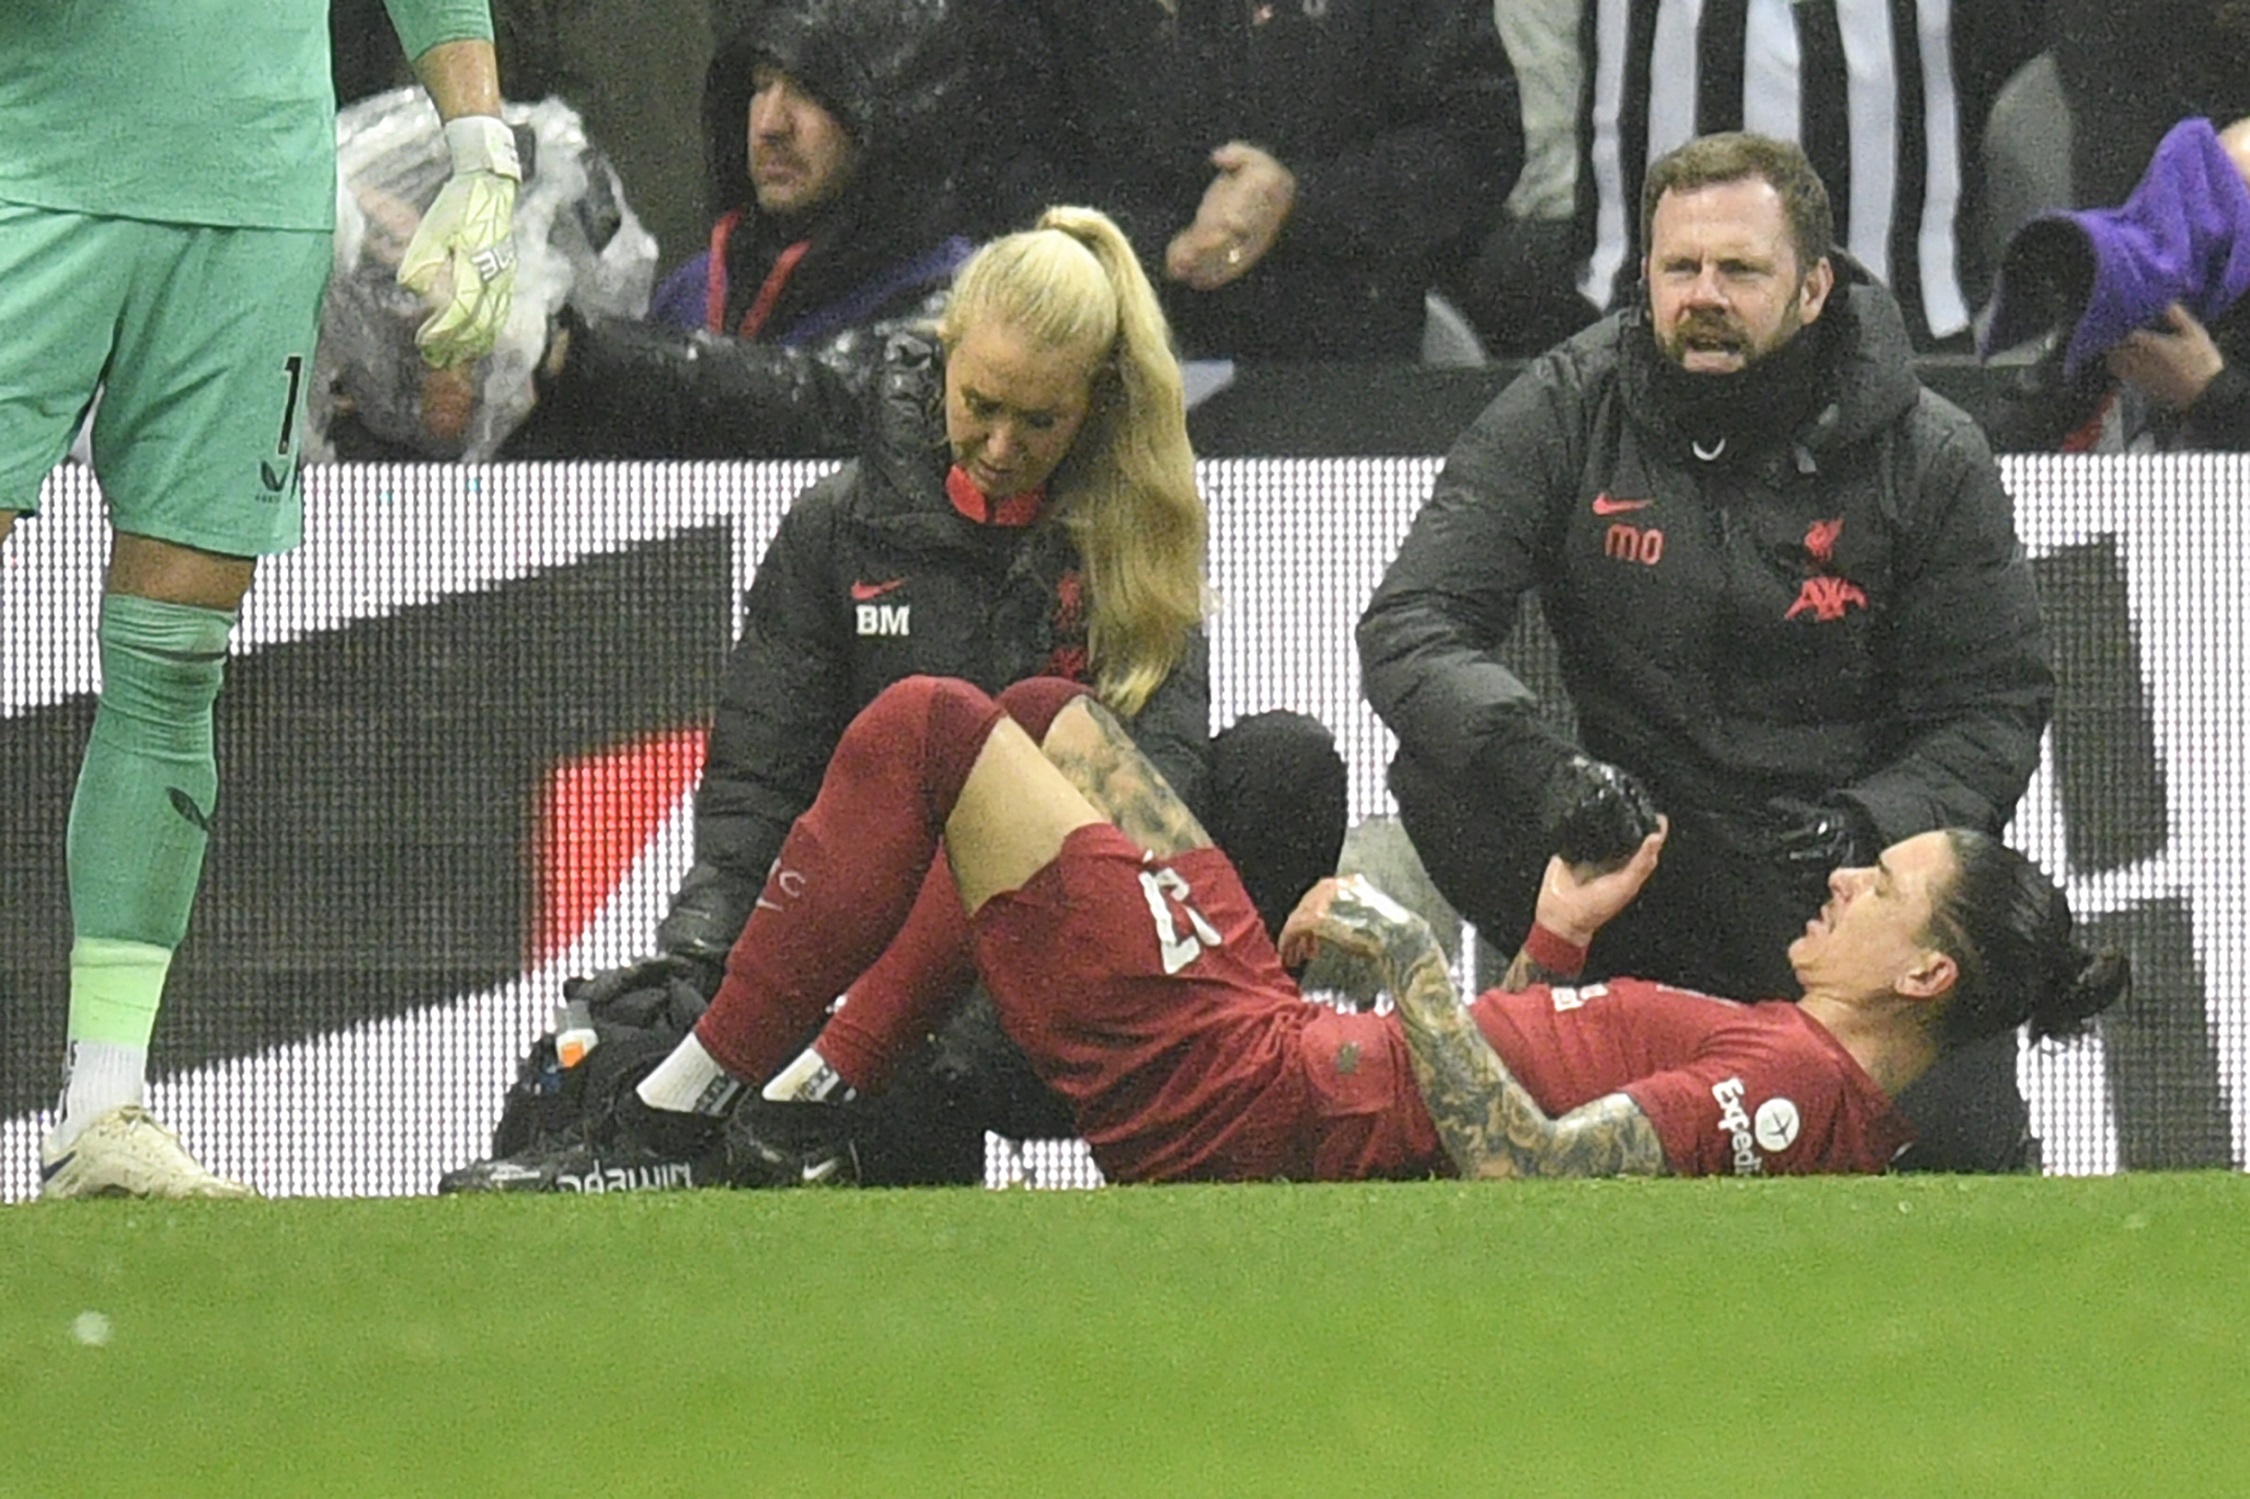 Darwin Nunez shoulder injury update shared ahead of Real Madrid clash